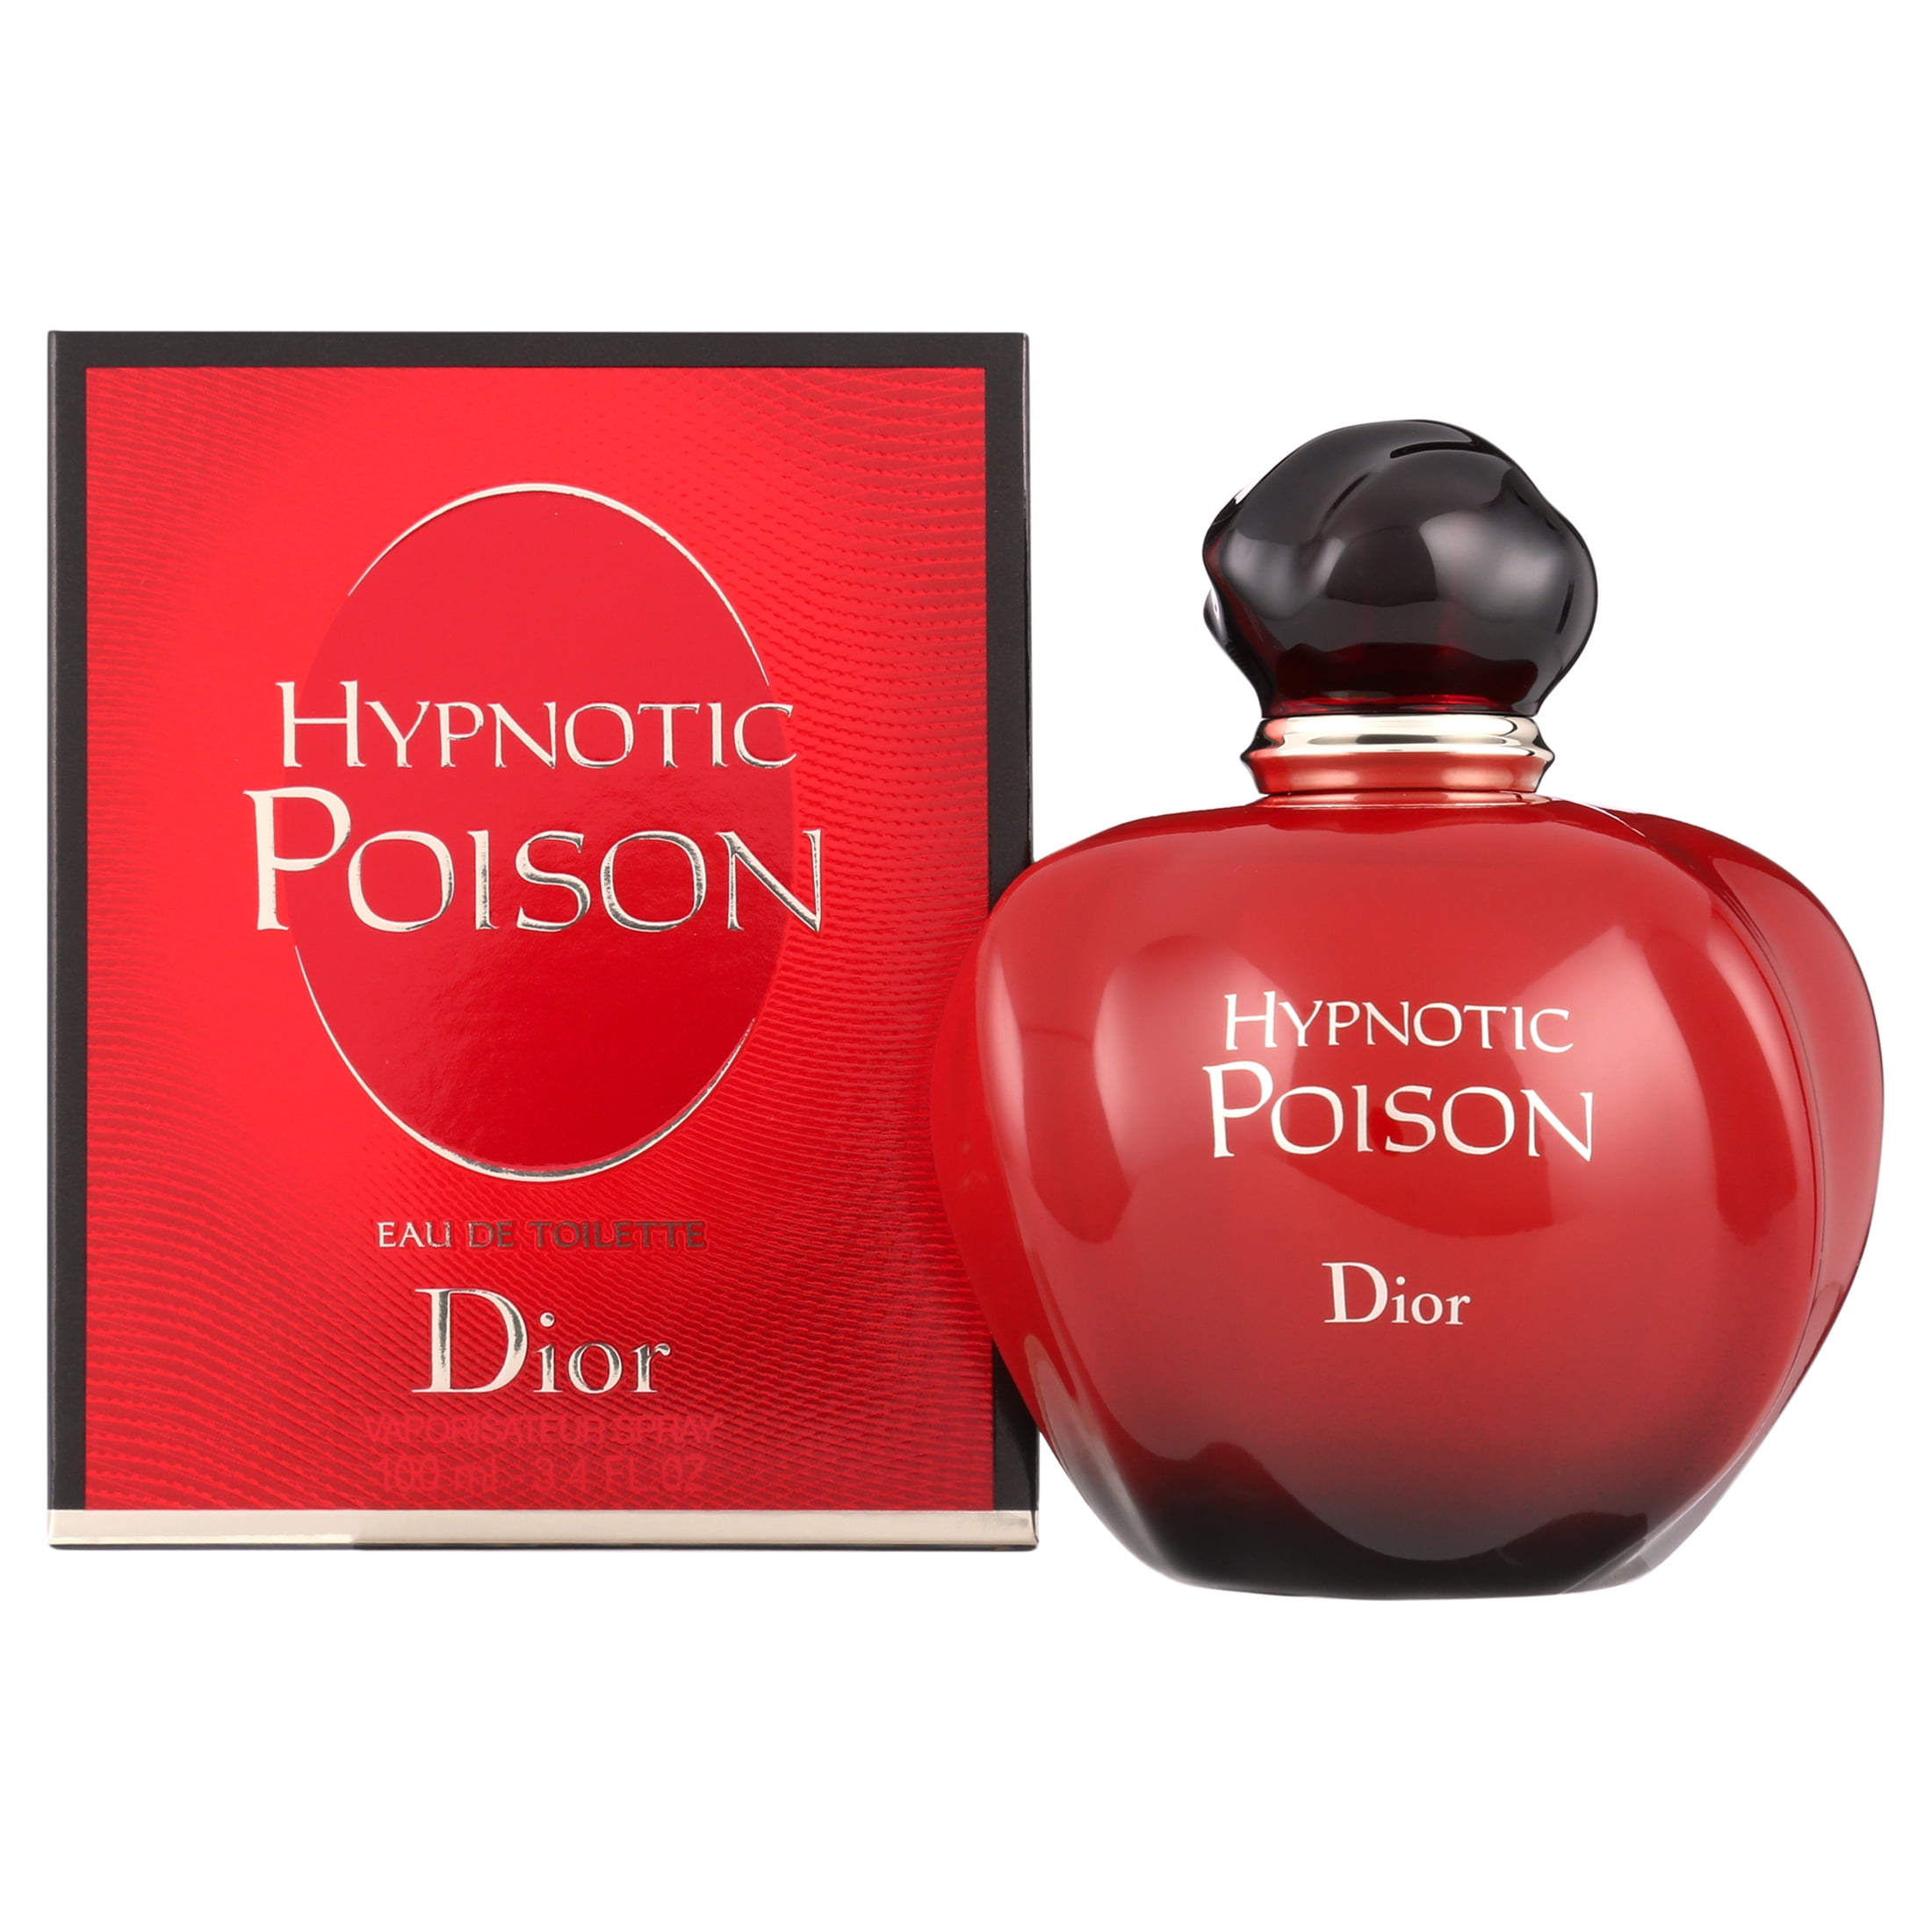 Similar to hypnotic poison - Dior